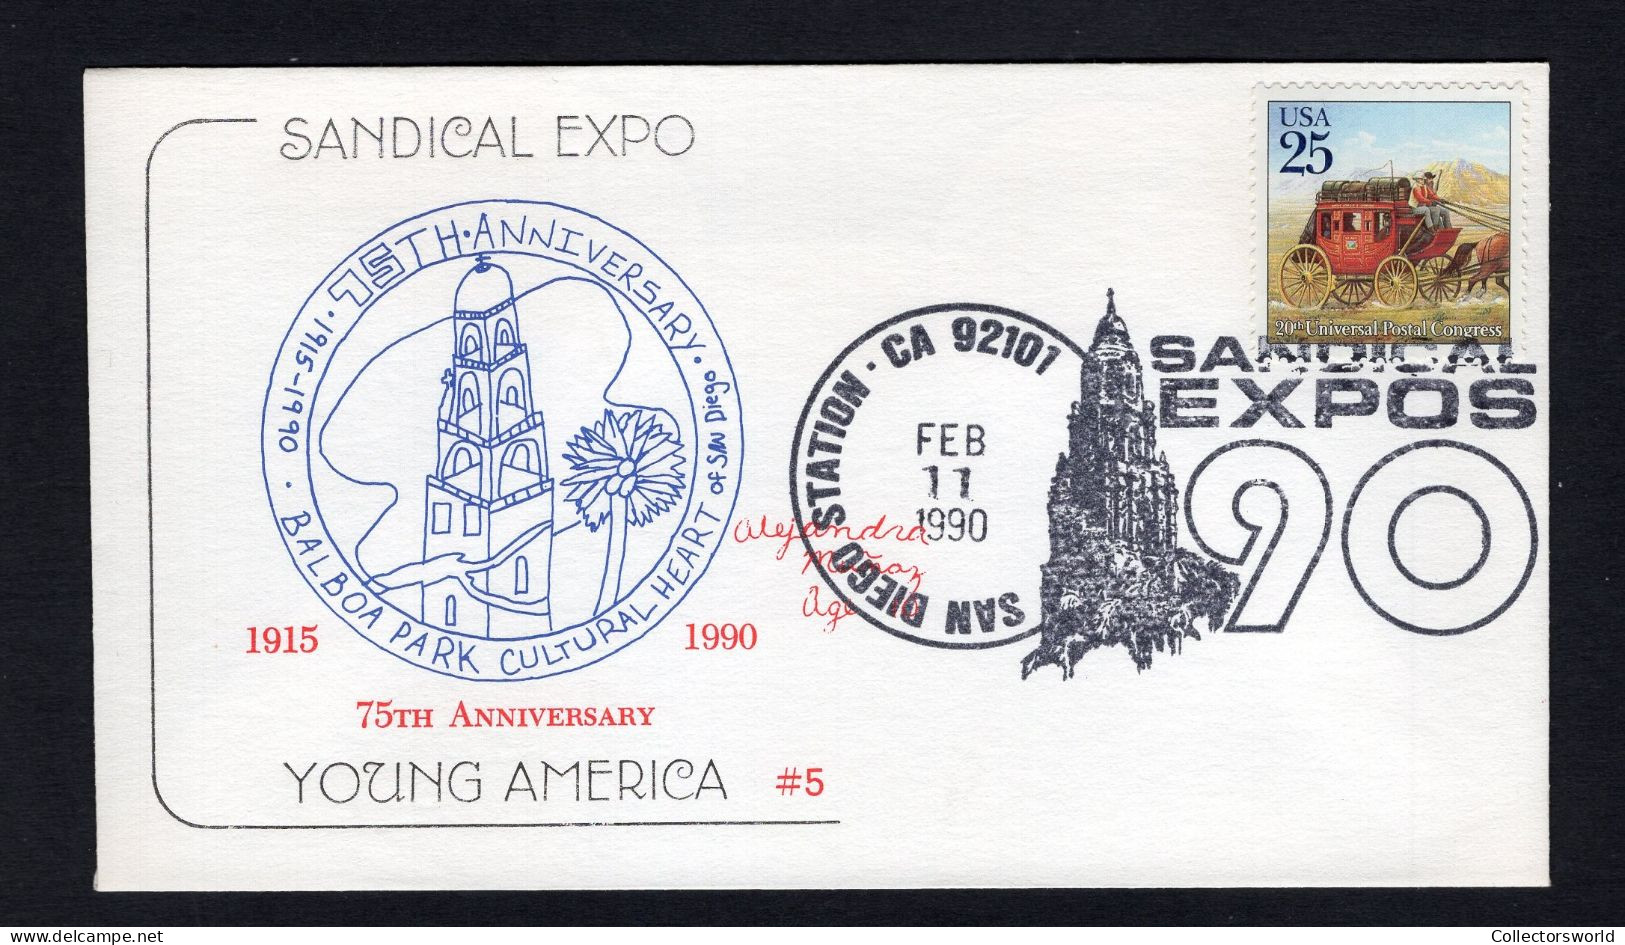 USA 1990 FDC Sandical Expo - Balboa Park Cultural Heart - Enveloppes évenementielles